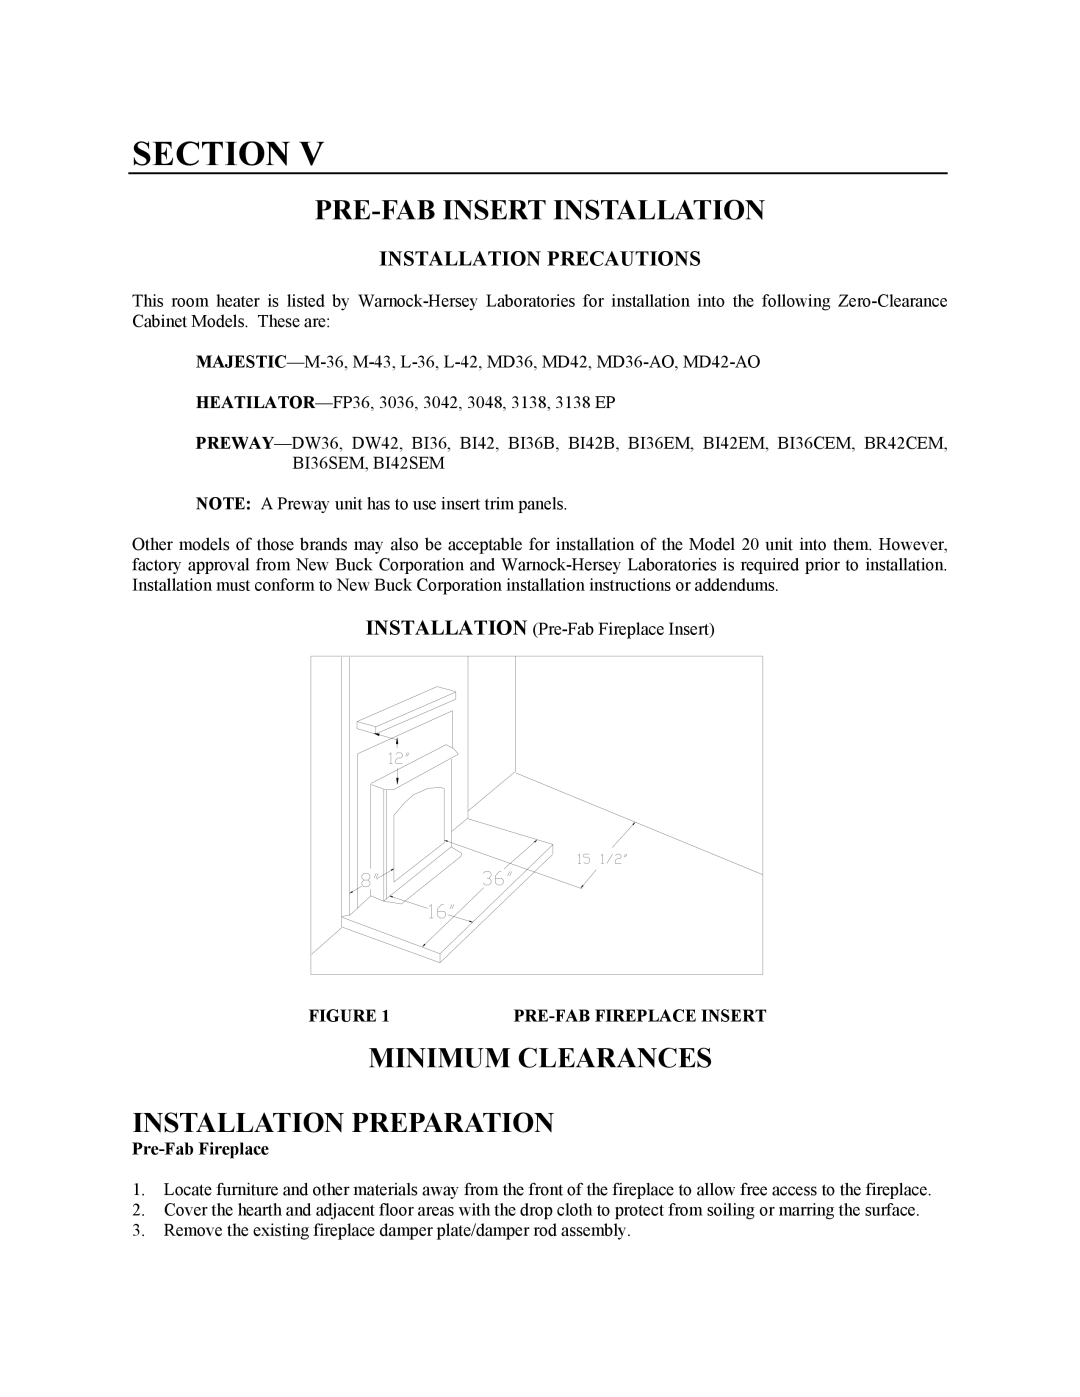 New Buck Corporation 20 Room Heater manual Pre-Fabinsert Installation, Minimum Clearances Installation Preparation, Section 